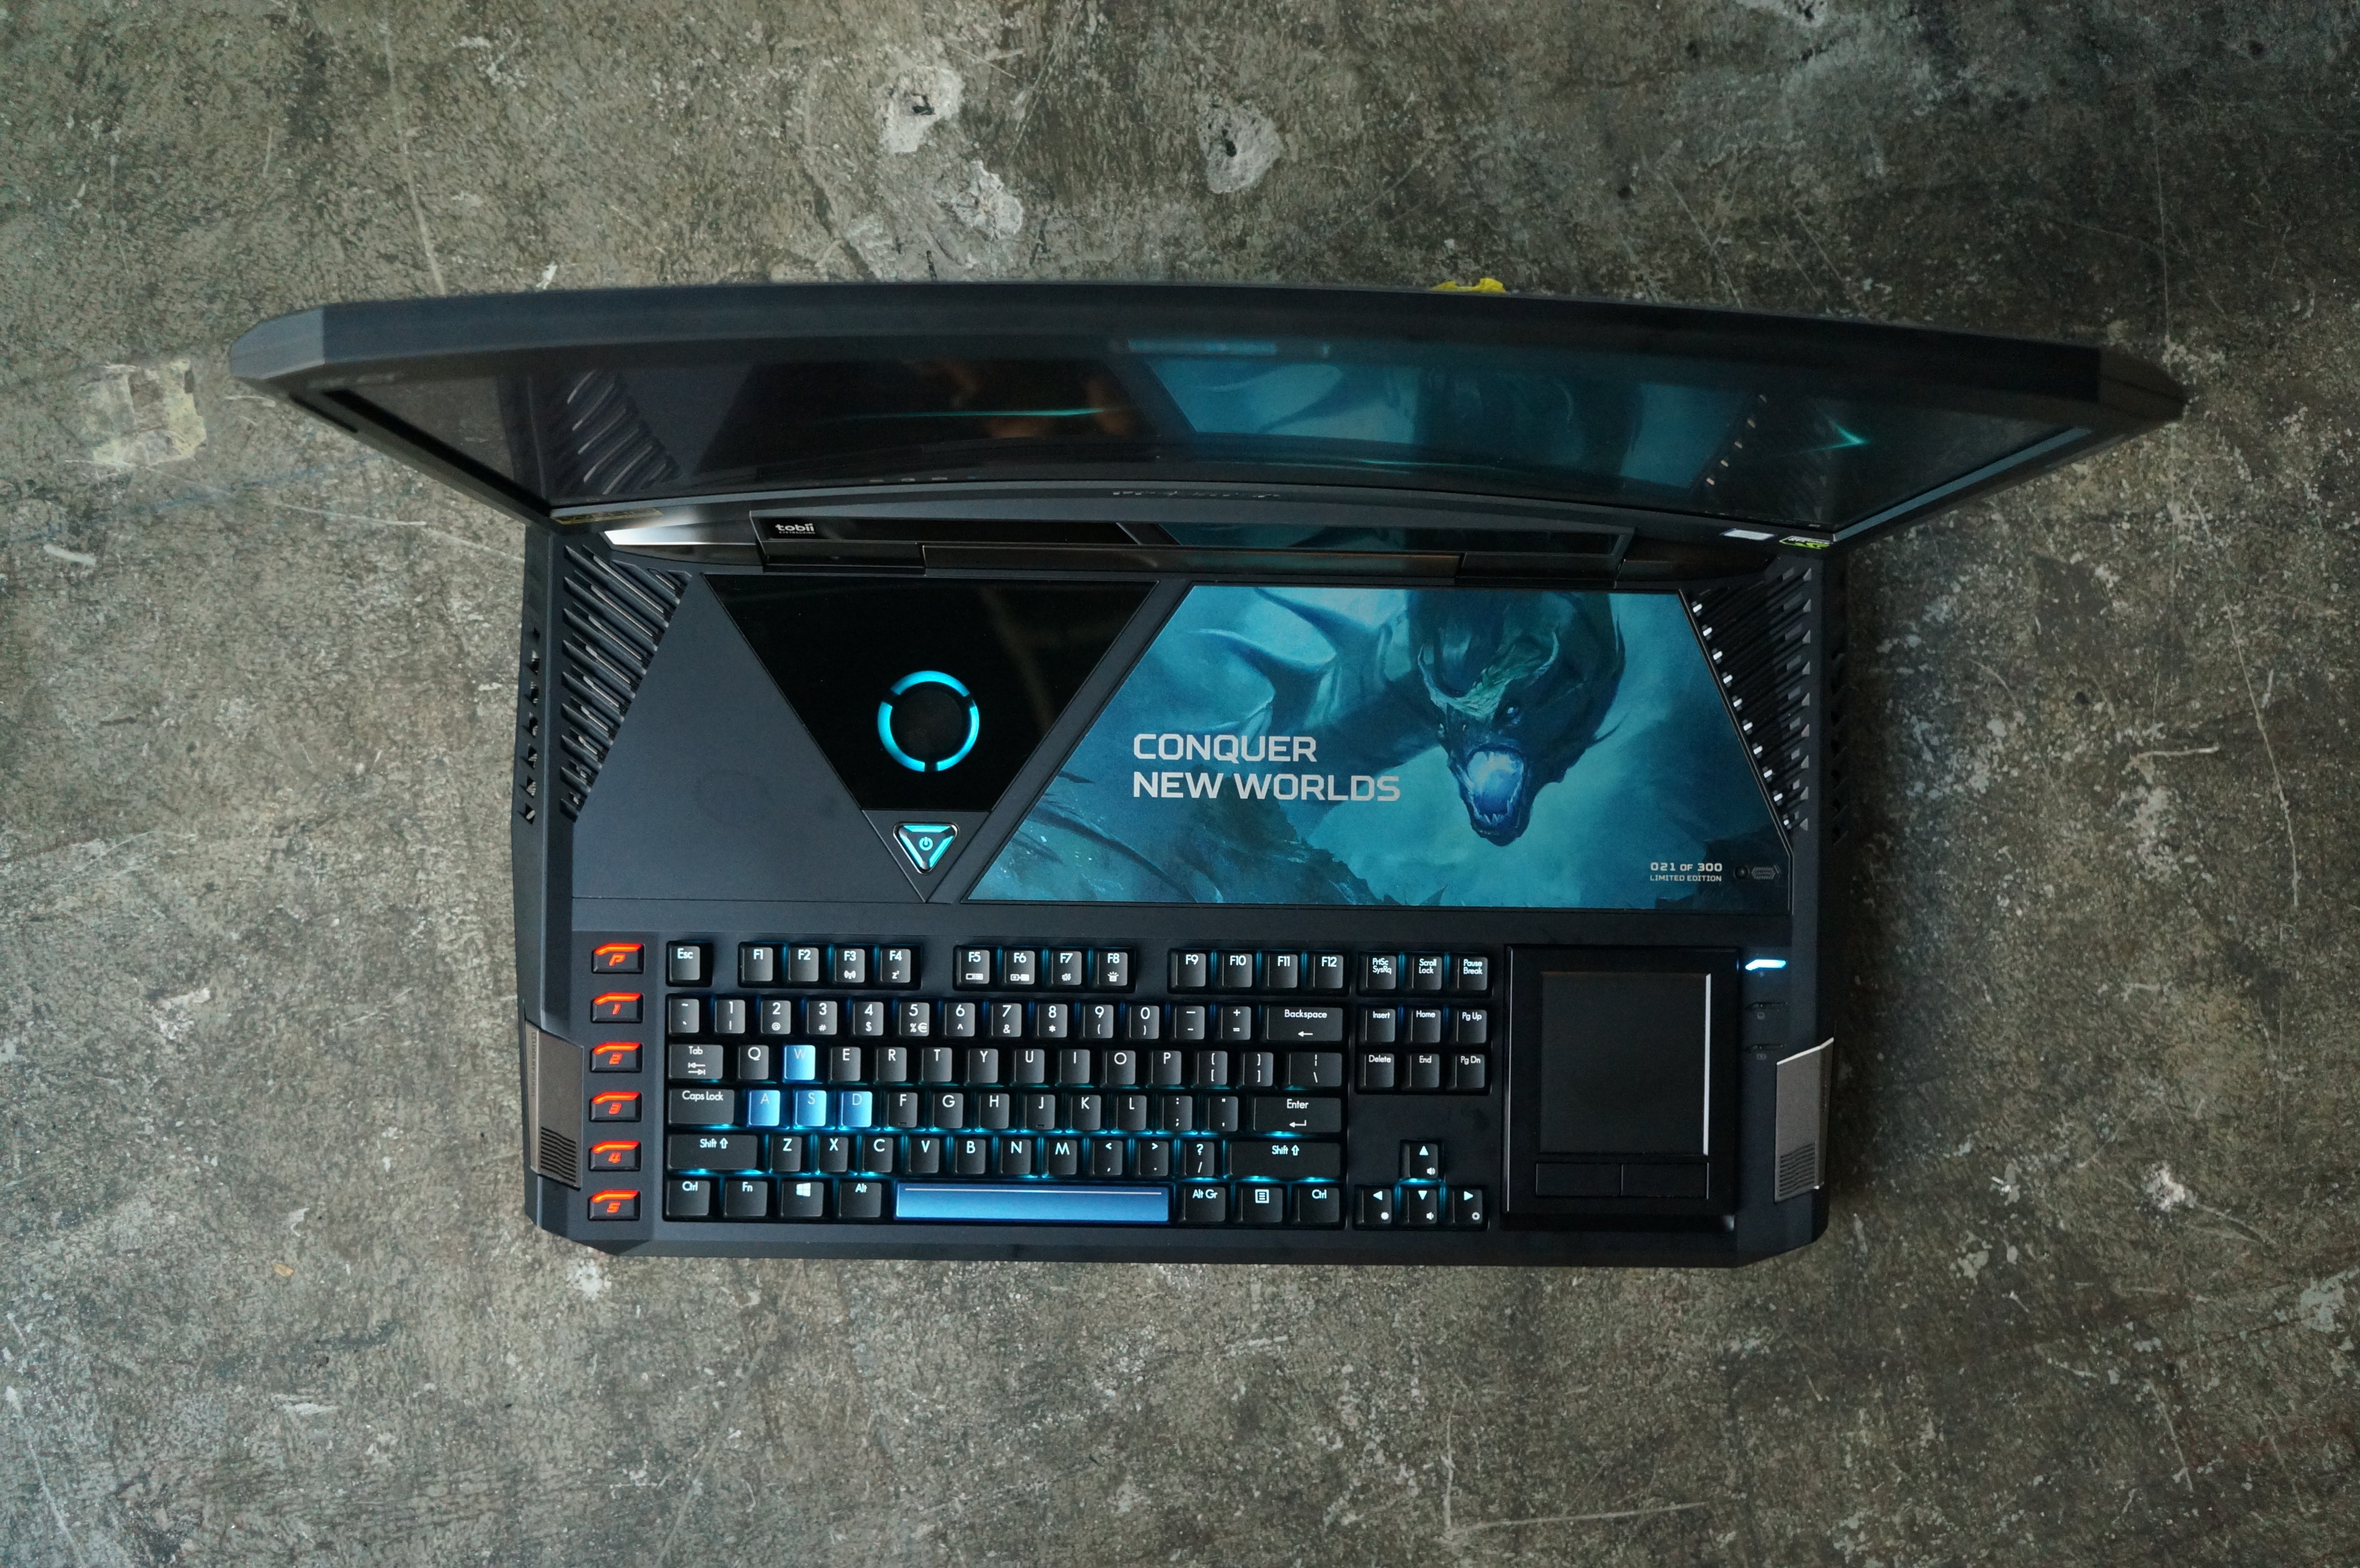 Acer Predator 21 X Review The Most Insane Laptop Ever Built Pcworld